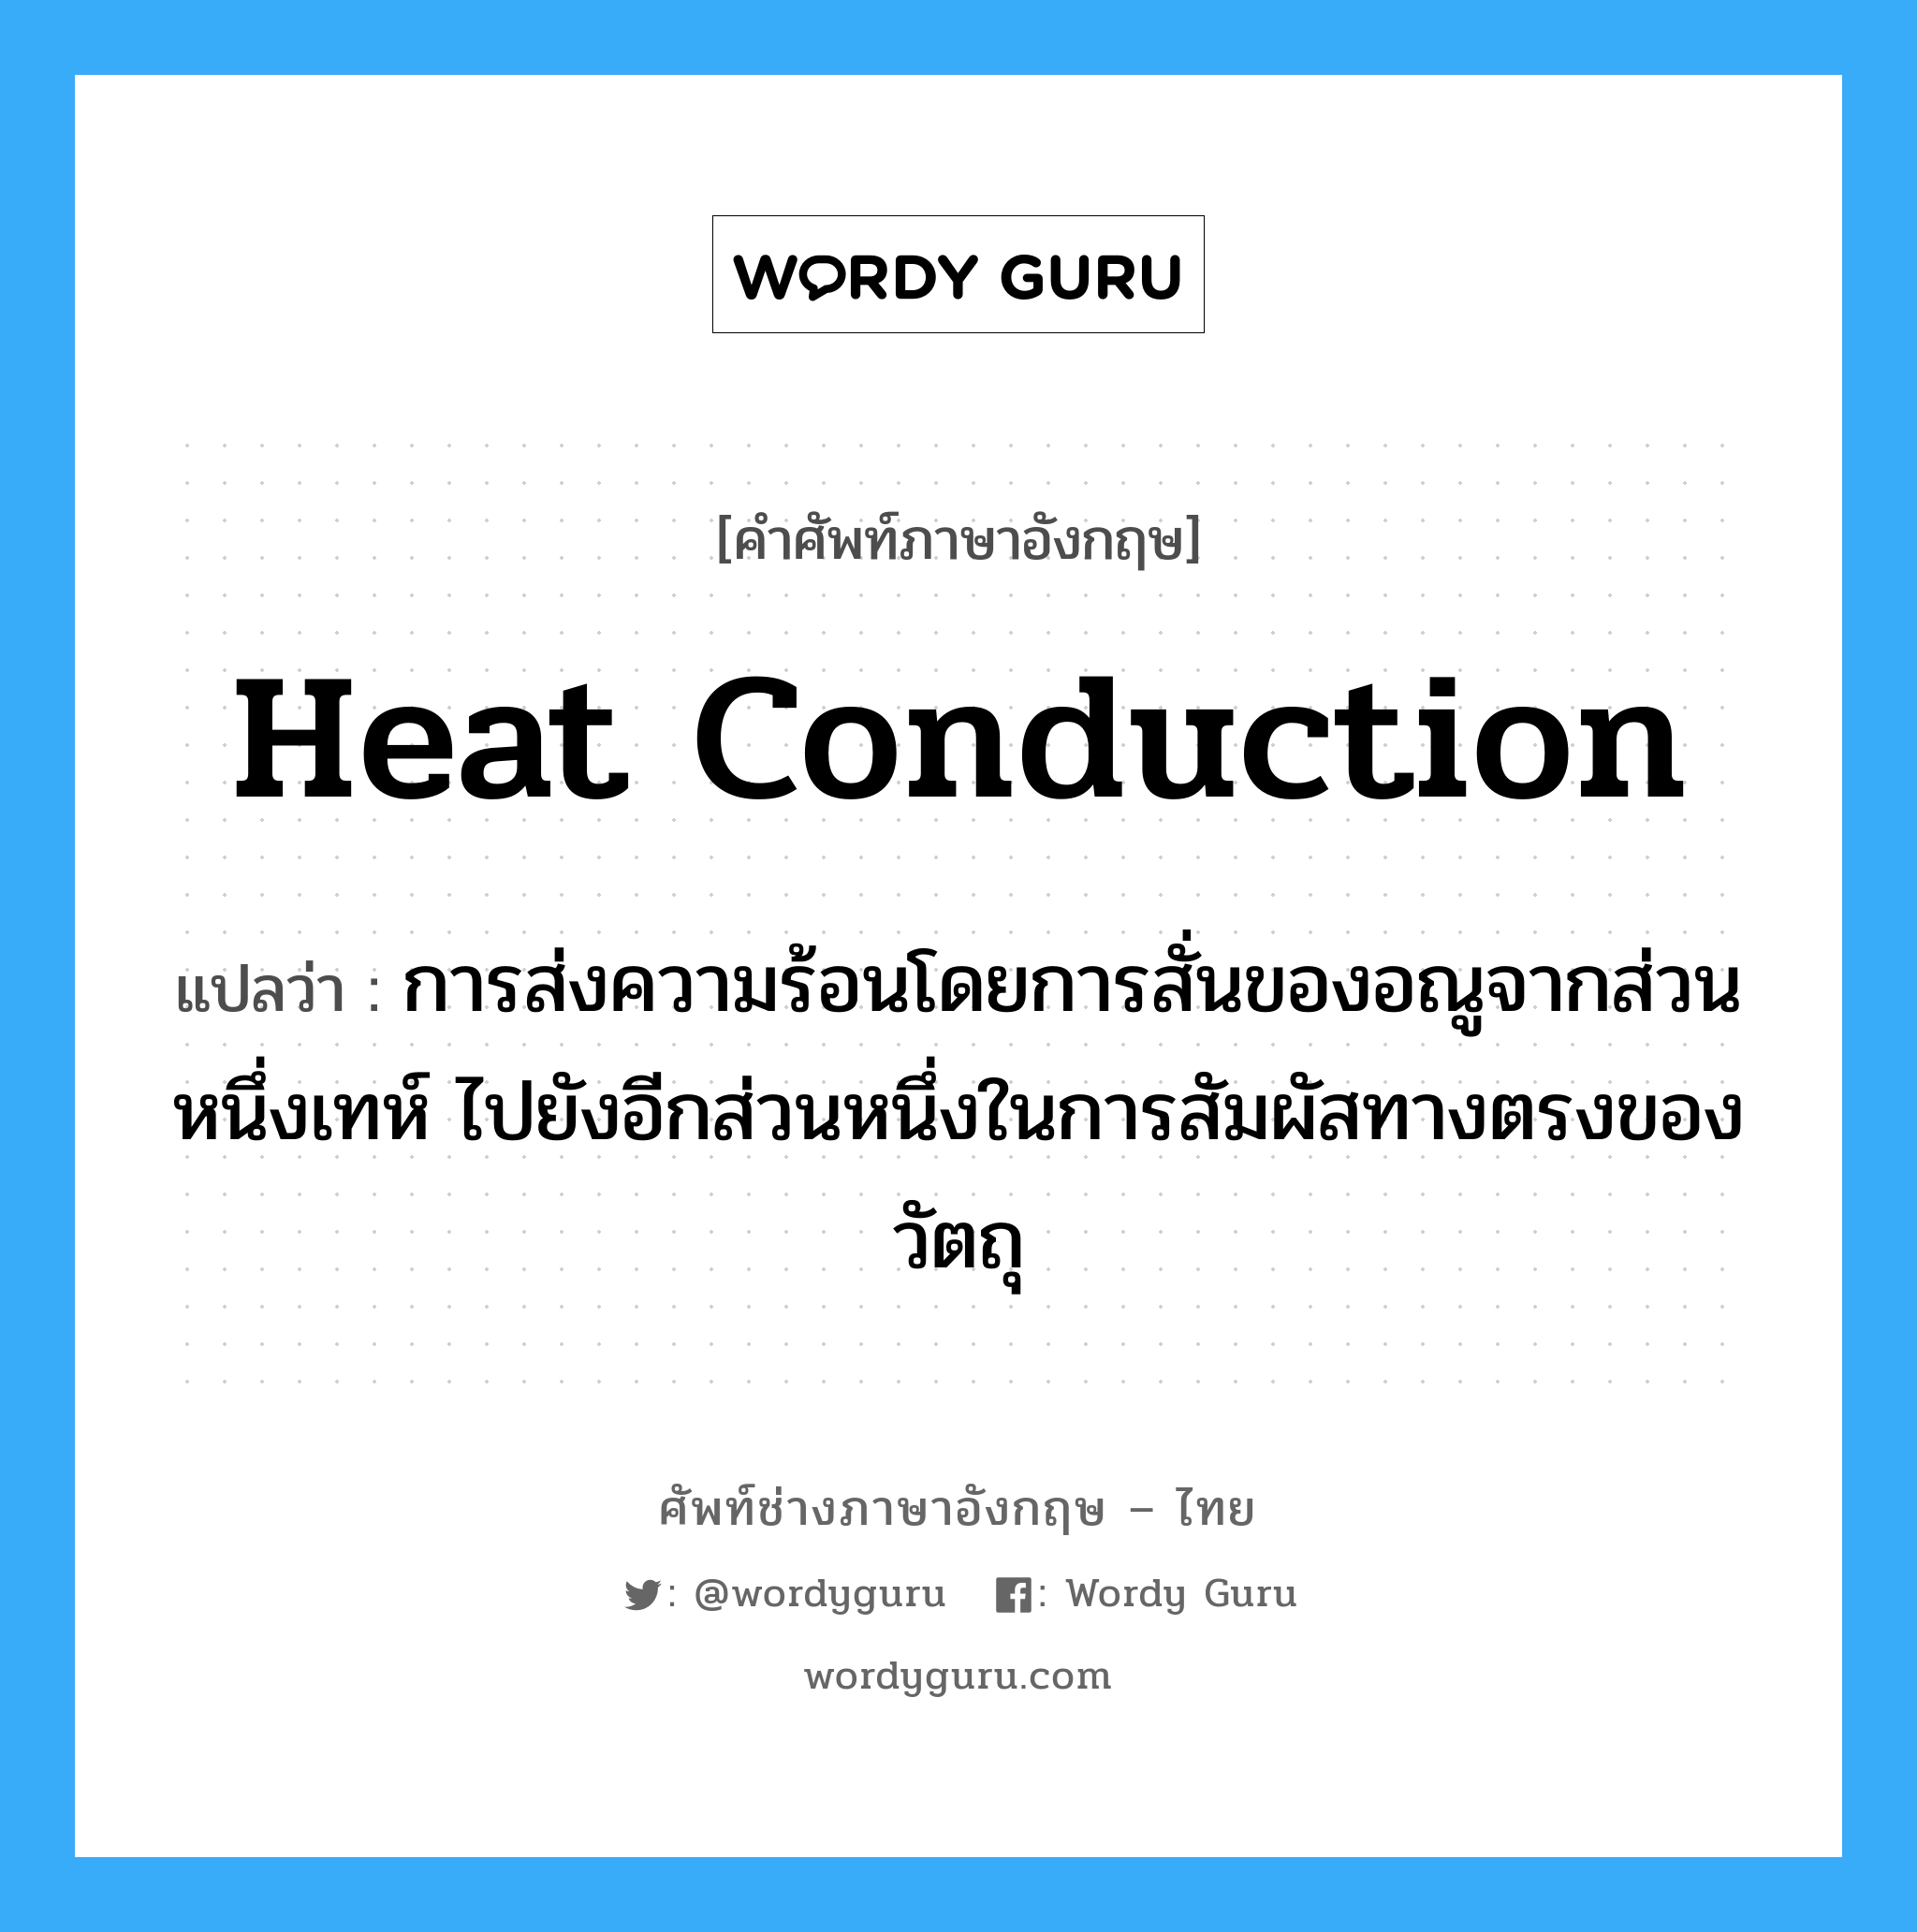 heat conduction แปลว่า?, คำศัพท์ช่างภาษาอังกฤษ - ไทย heat conduction คำศัพท์ภาษาอังกฤษ heat conduction แปลว่า การส่งความร้อนโดยการสั่นของอณูจากส่วนหนึ่งเทห์ ไปยังอีกส่วนหนึ่งในการสัมผัสทางตรงของวัตถุ